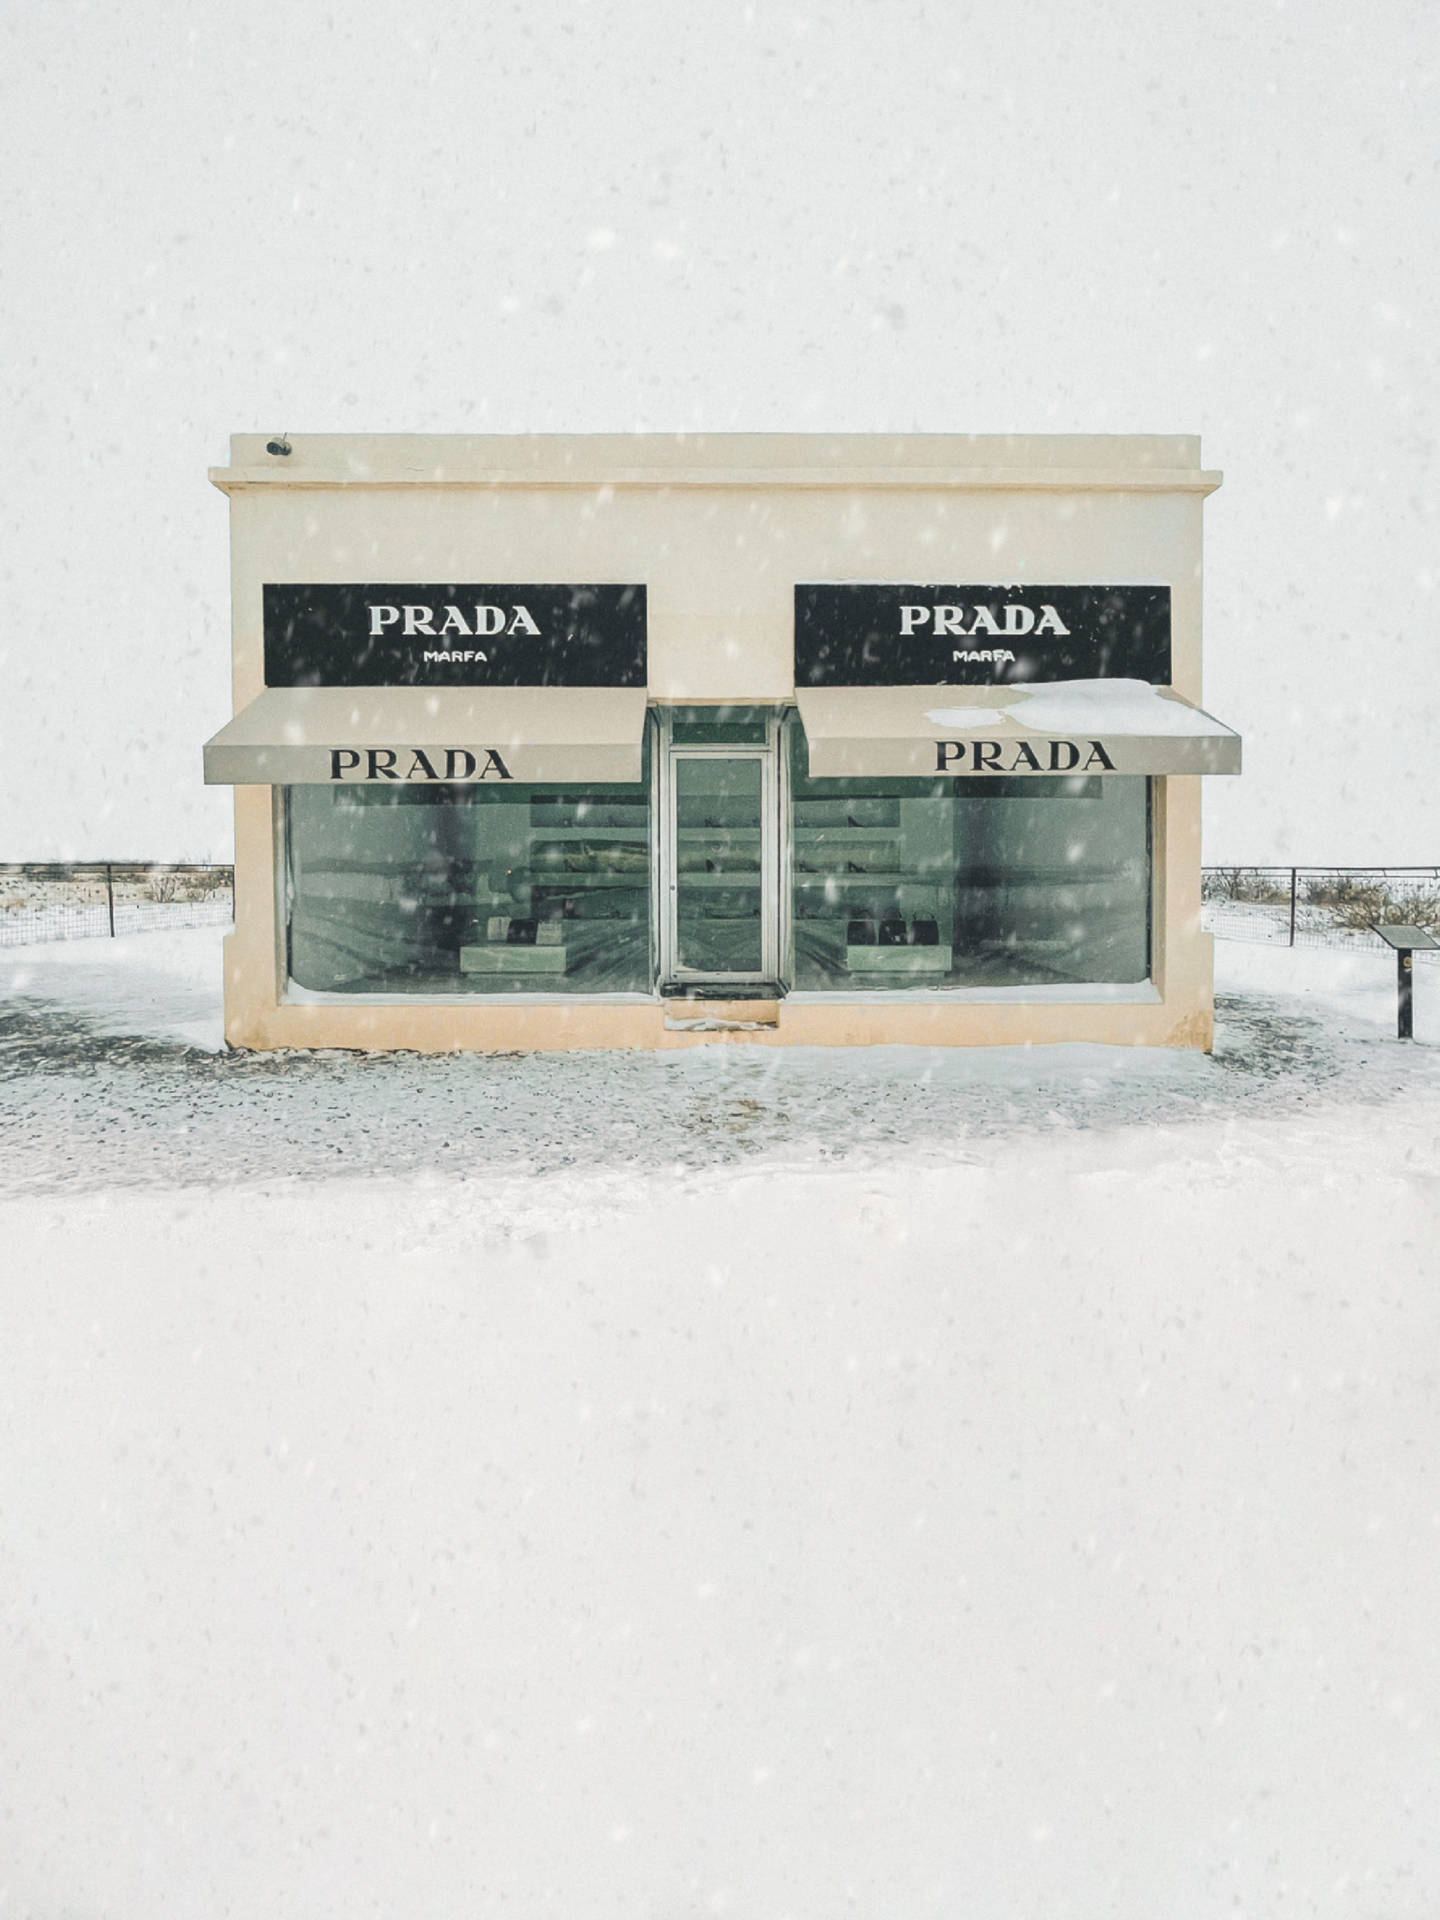 Prada Marfa In Winter Background